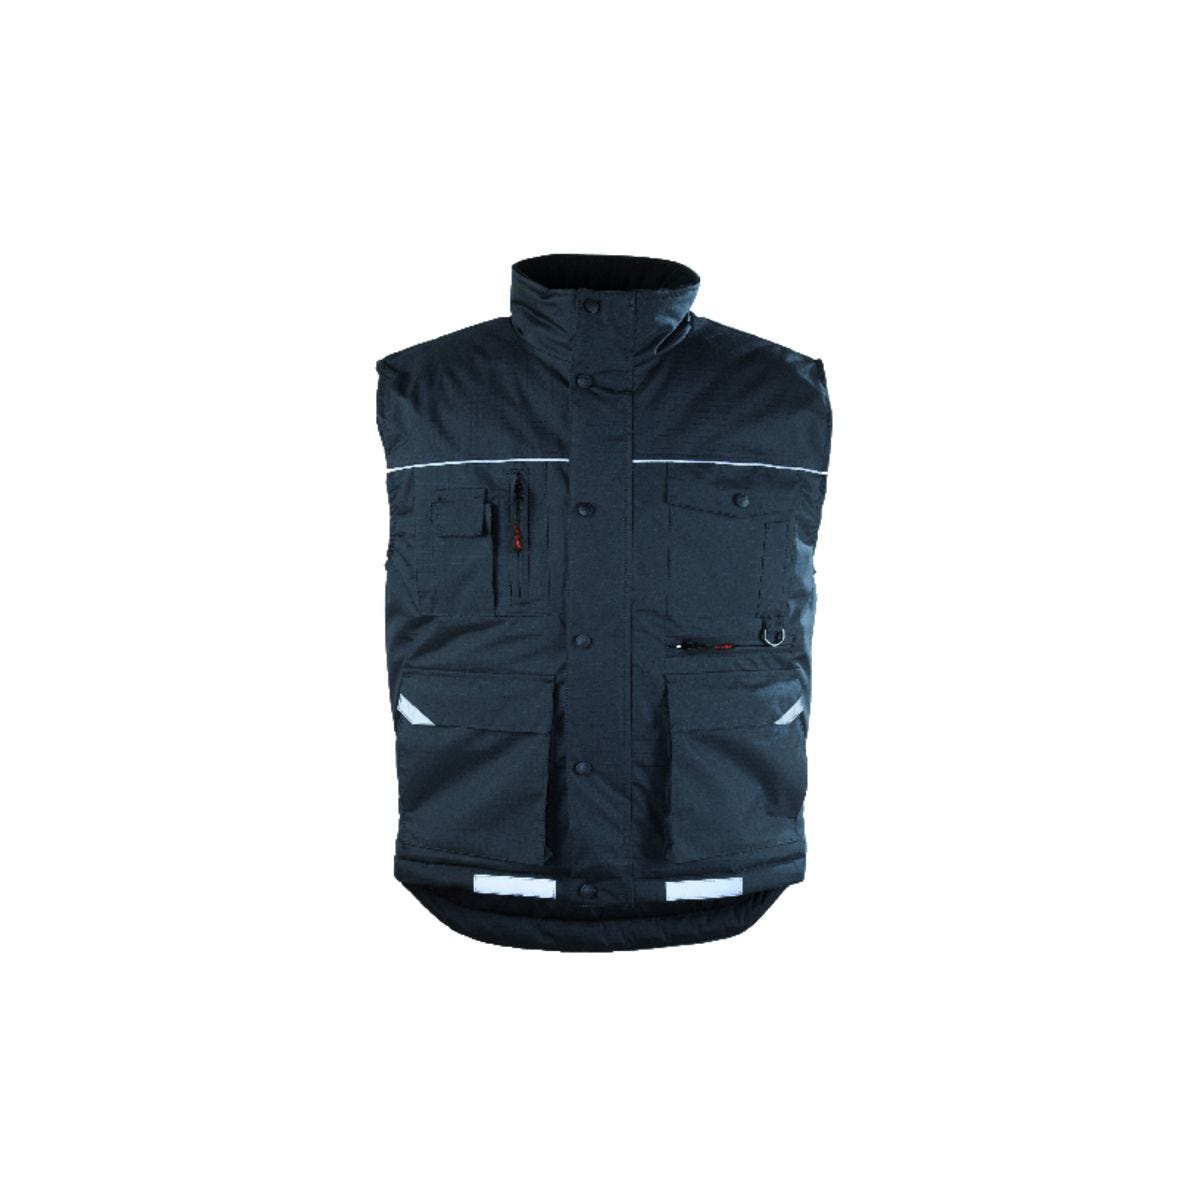 RIPSTOP Gilet Froid noir, Polyester Risptop + Matelassage 180g/m² - Coverguard - Taille L 0